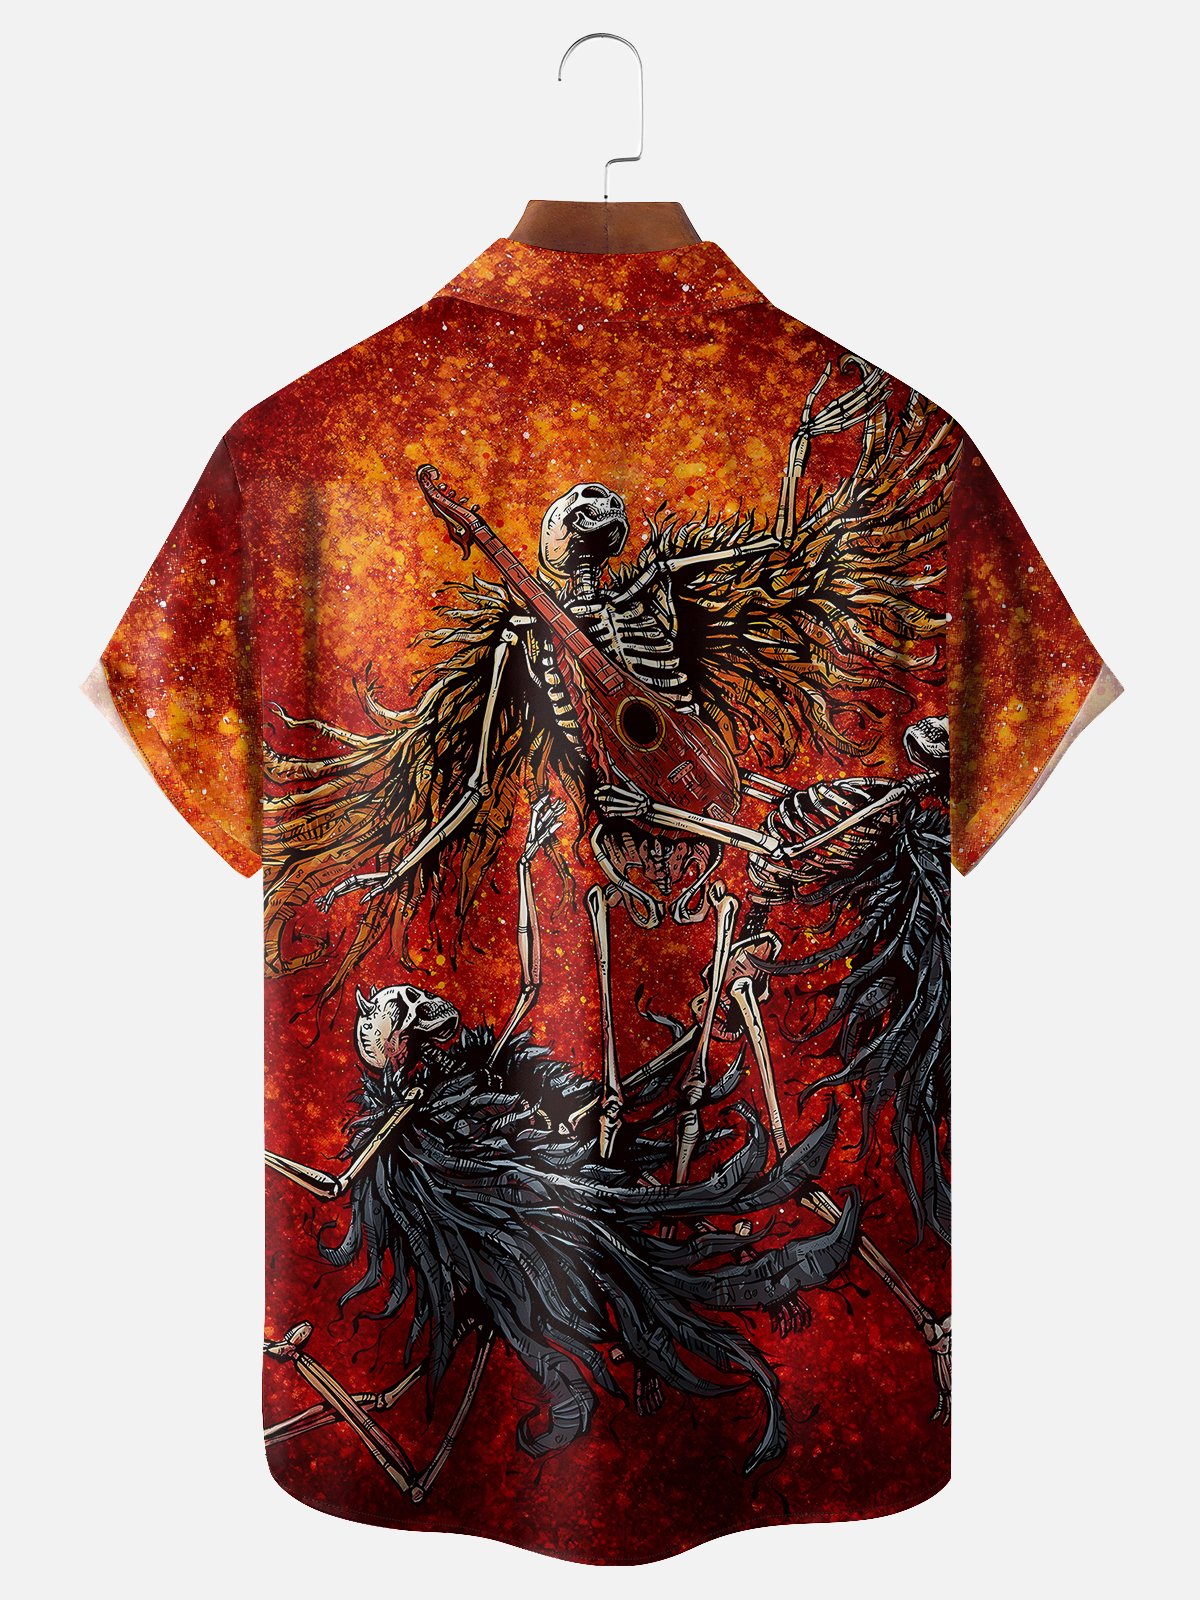 Ascension Shirt By David Lozeau